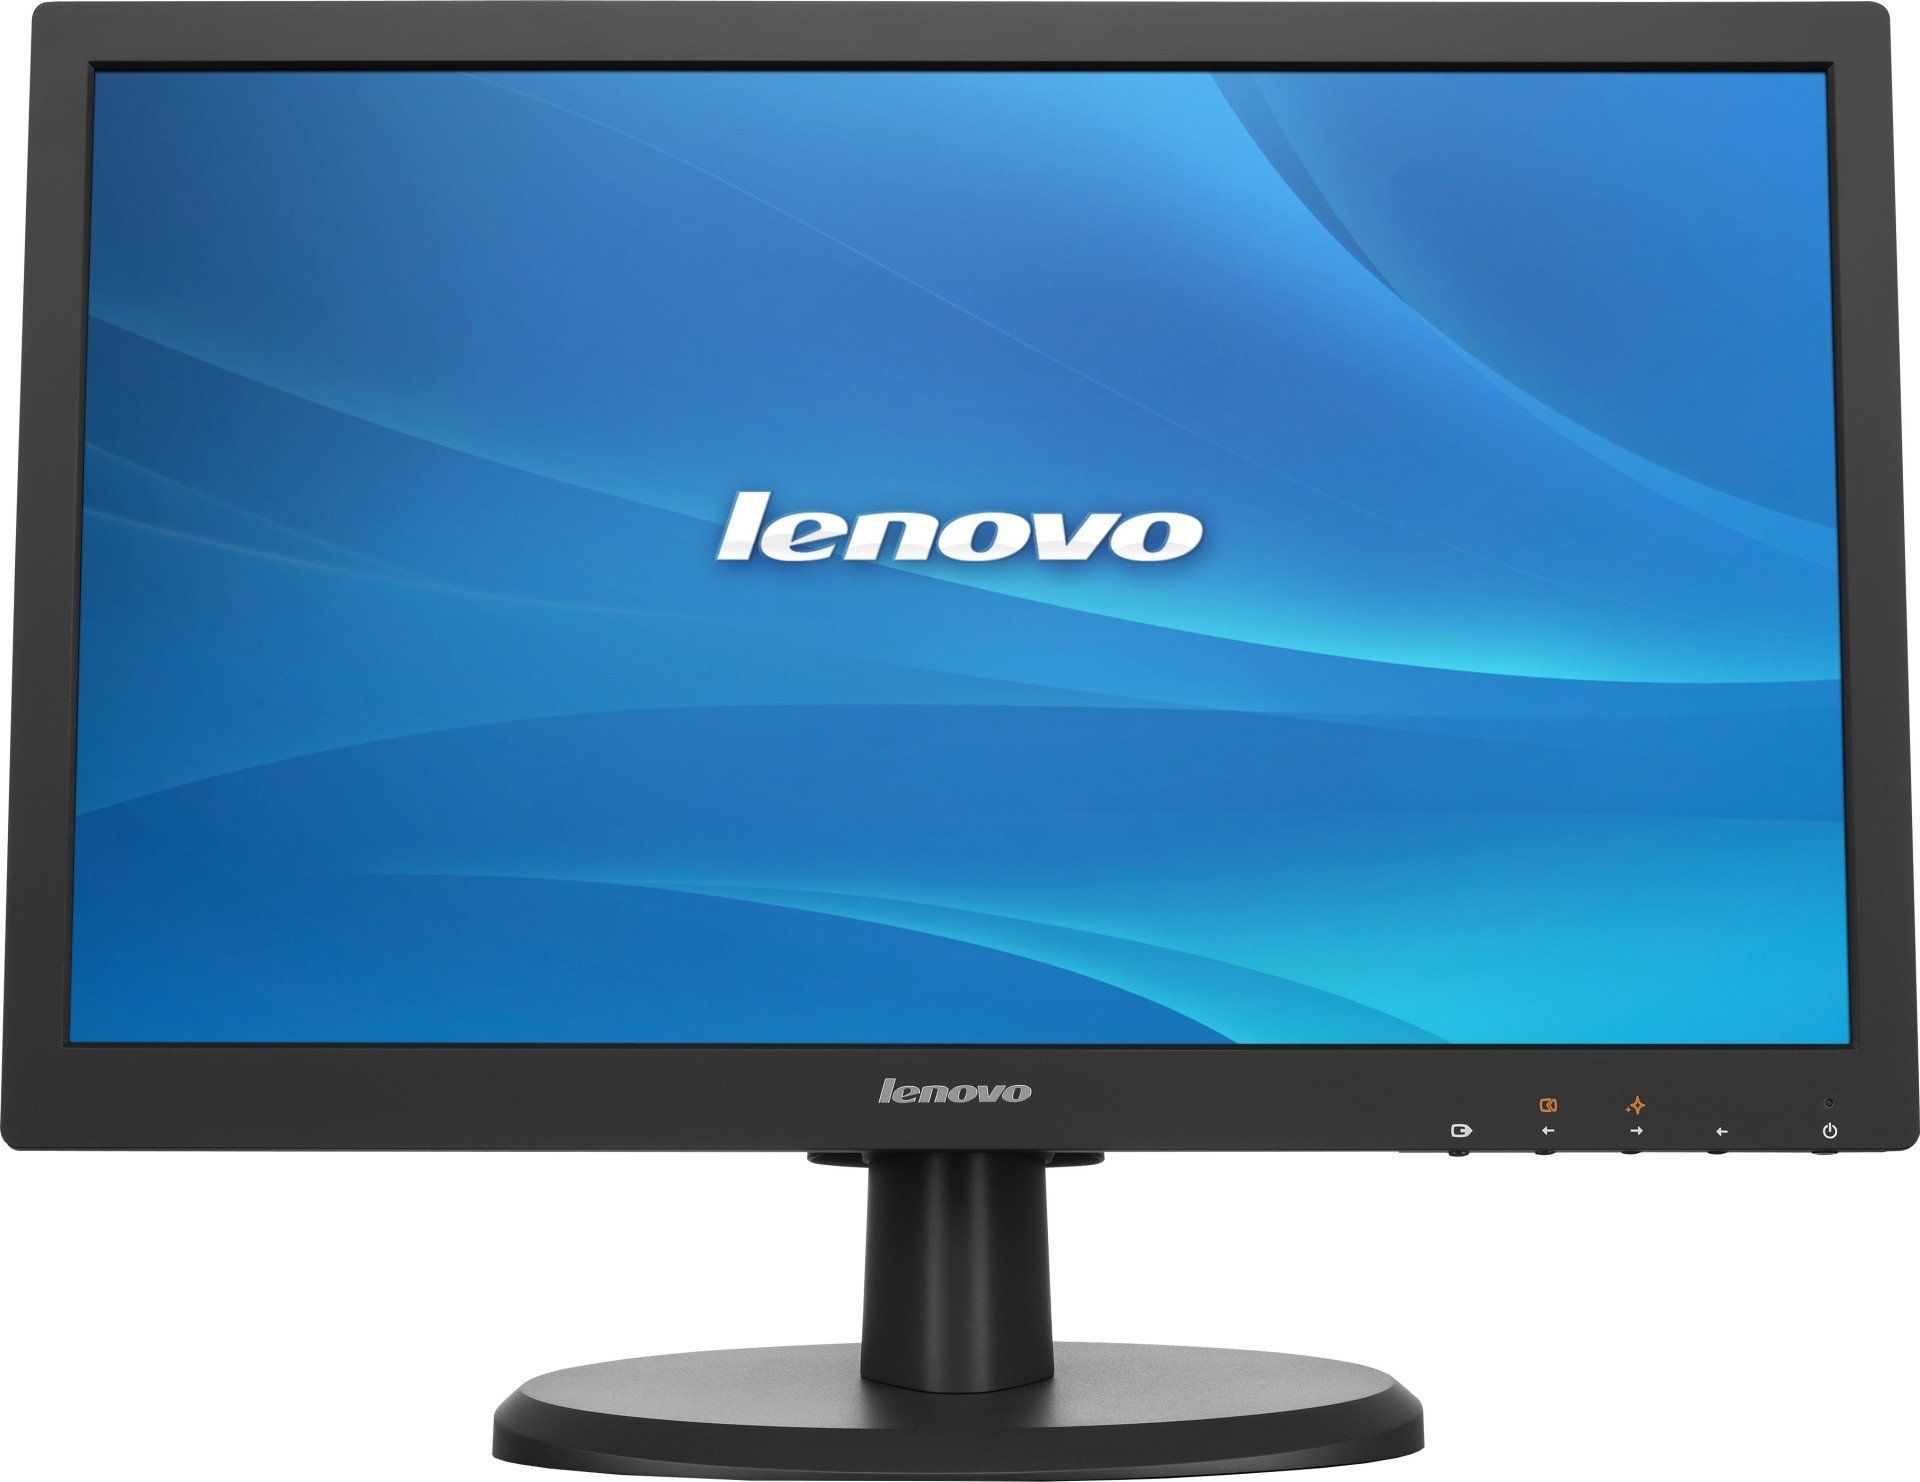 Buy Lenovo TFT monitors